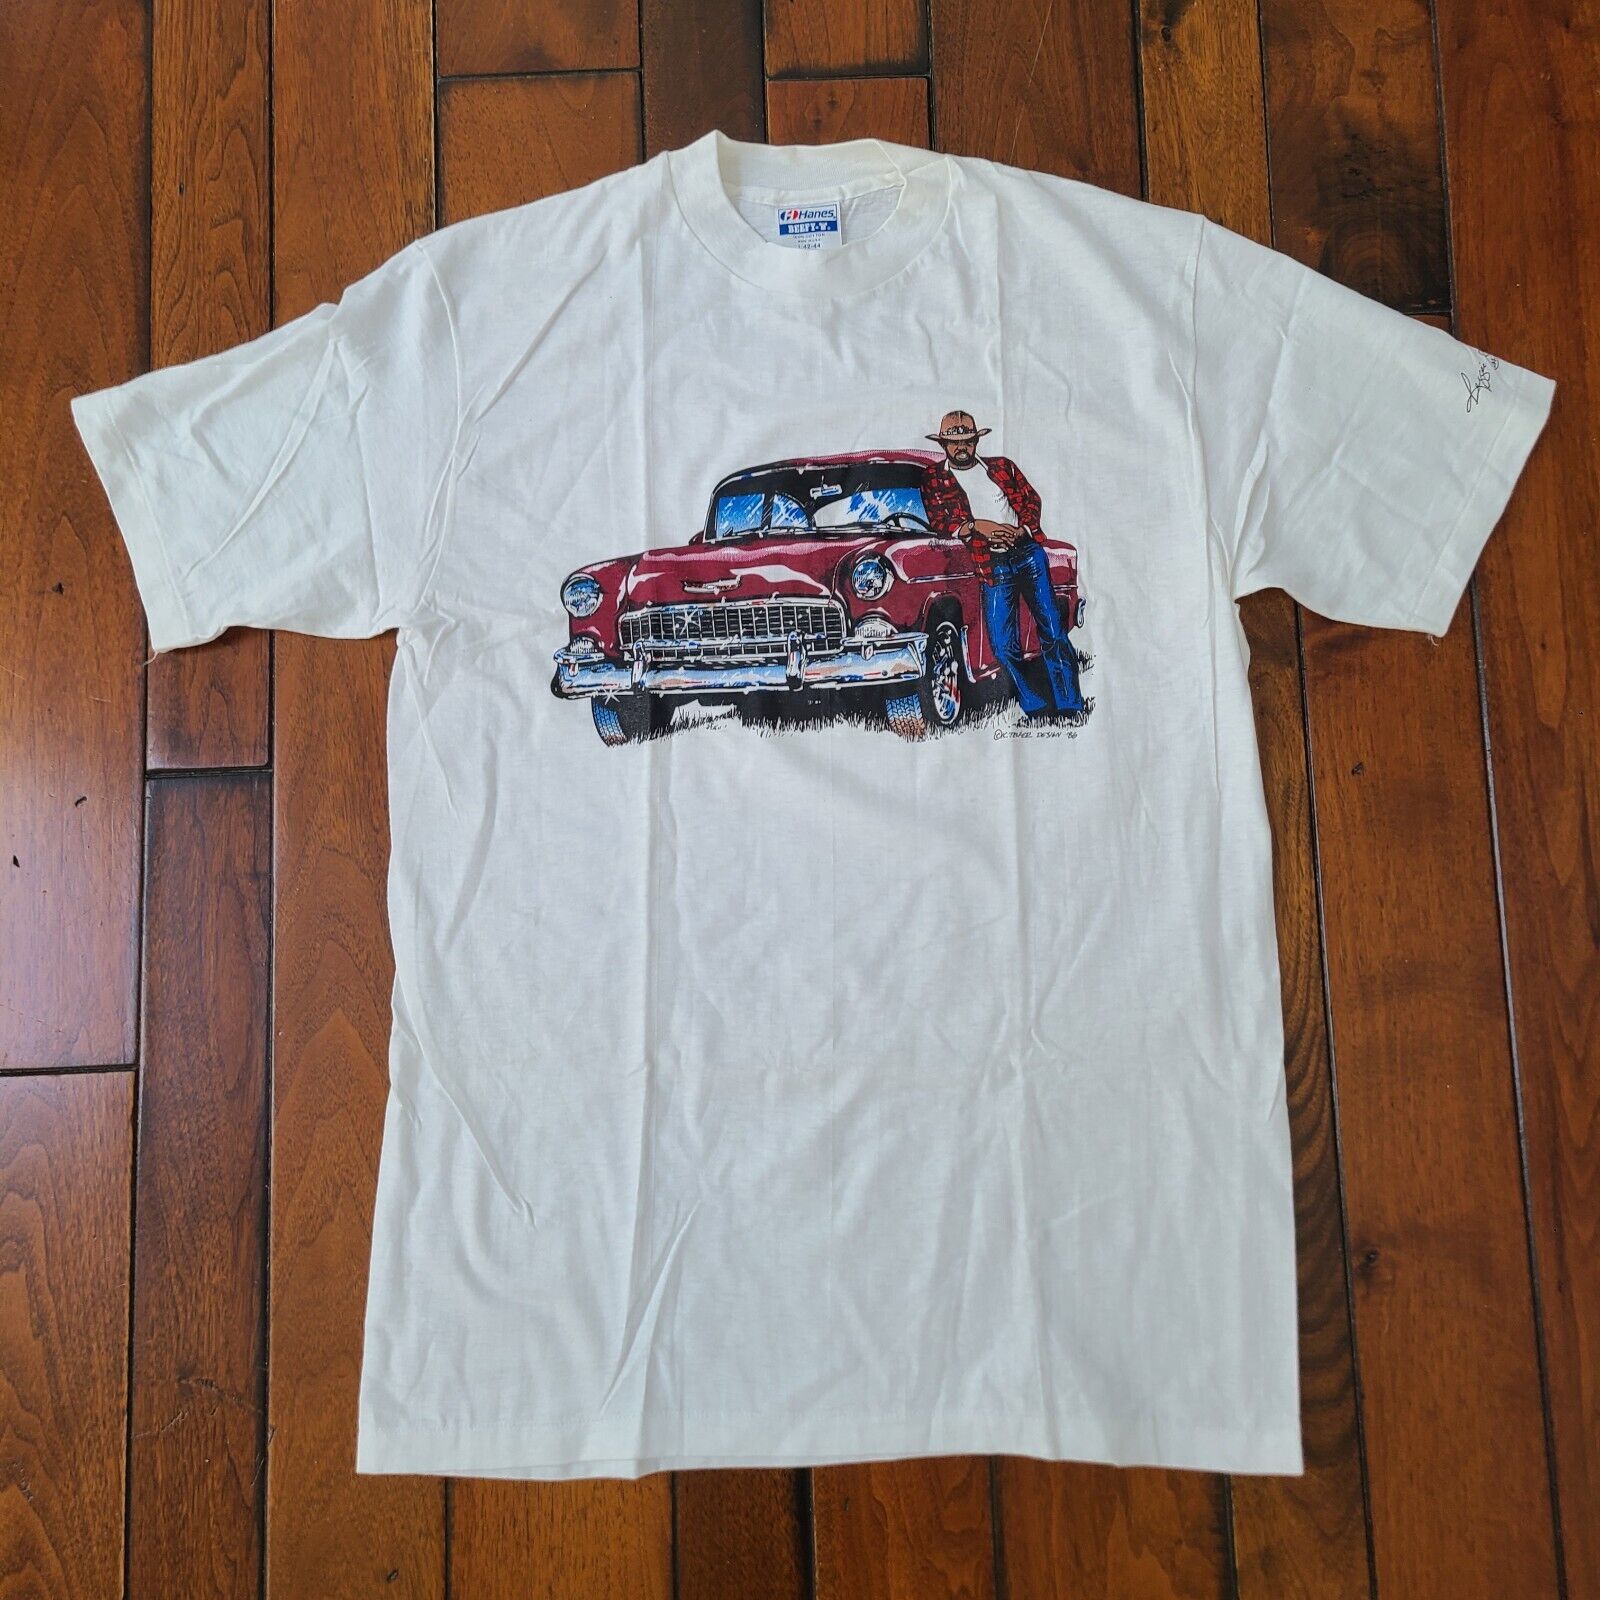 Primary image for Vintage Reggie Jackson 55 Chevy Shirt Oakland A's Single Stitch Size L 1986 NOS